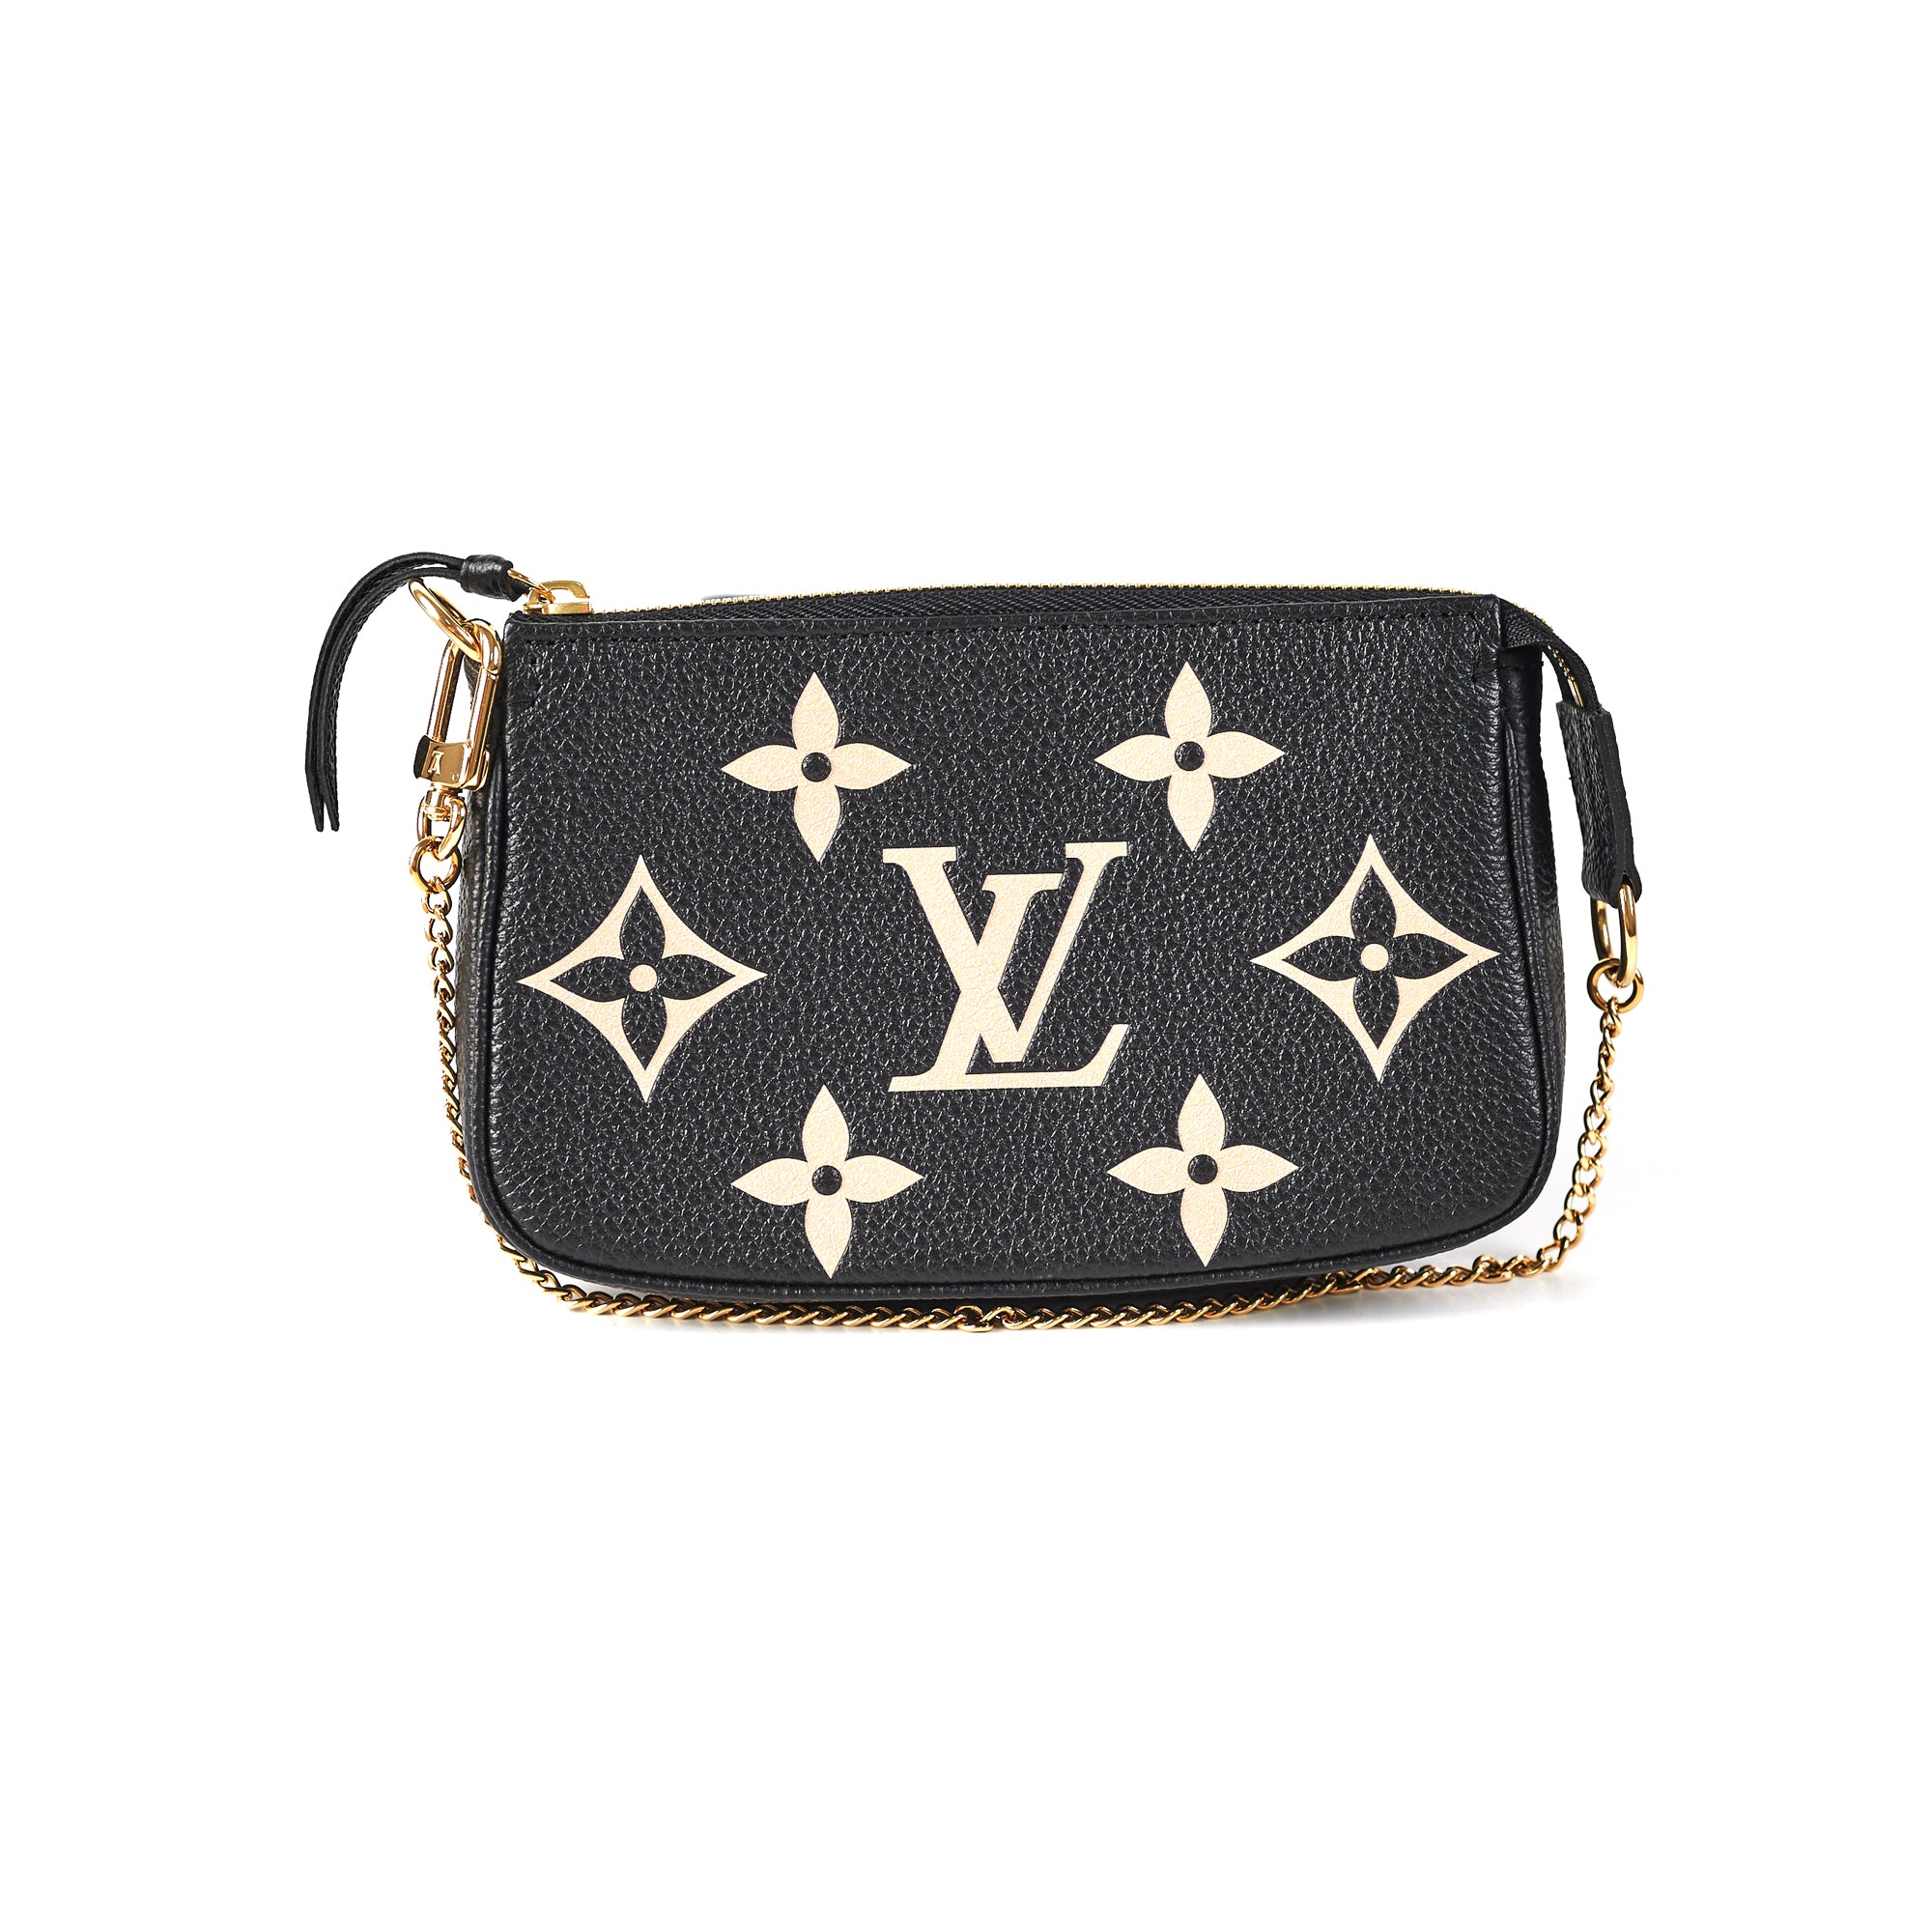 Louis Vuitton Mini Pochette Monogram - THE PURSE AFFAIR